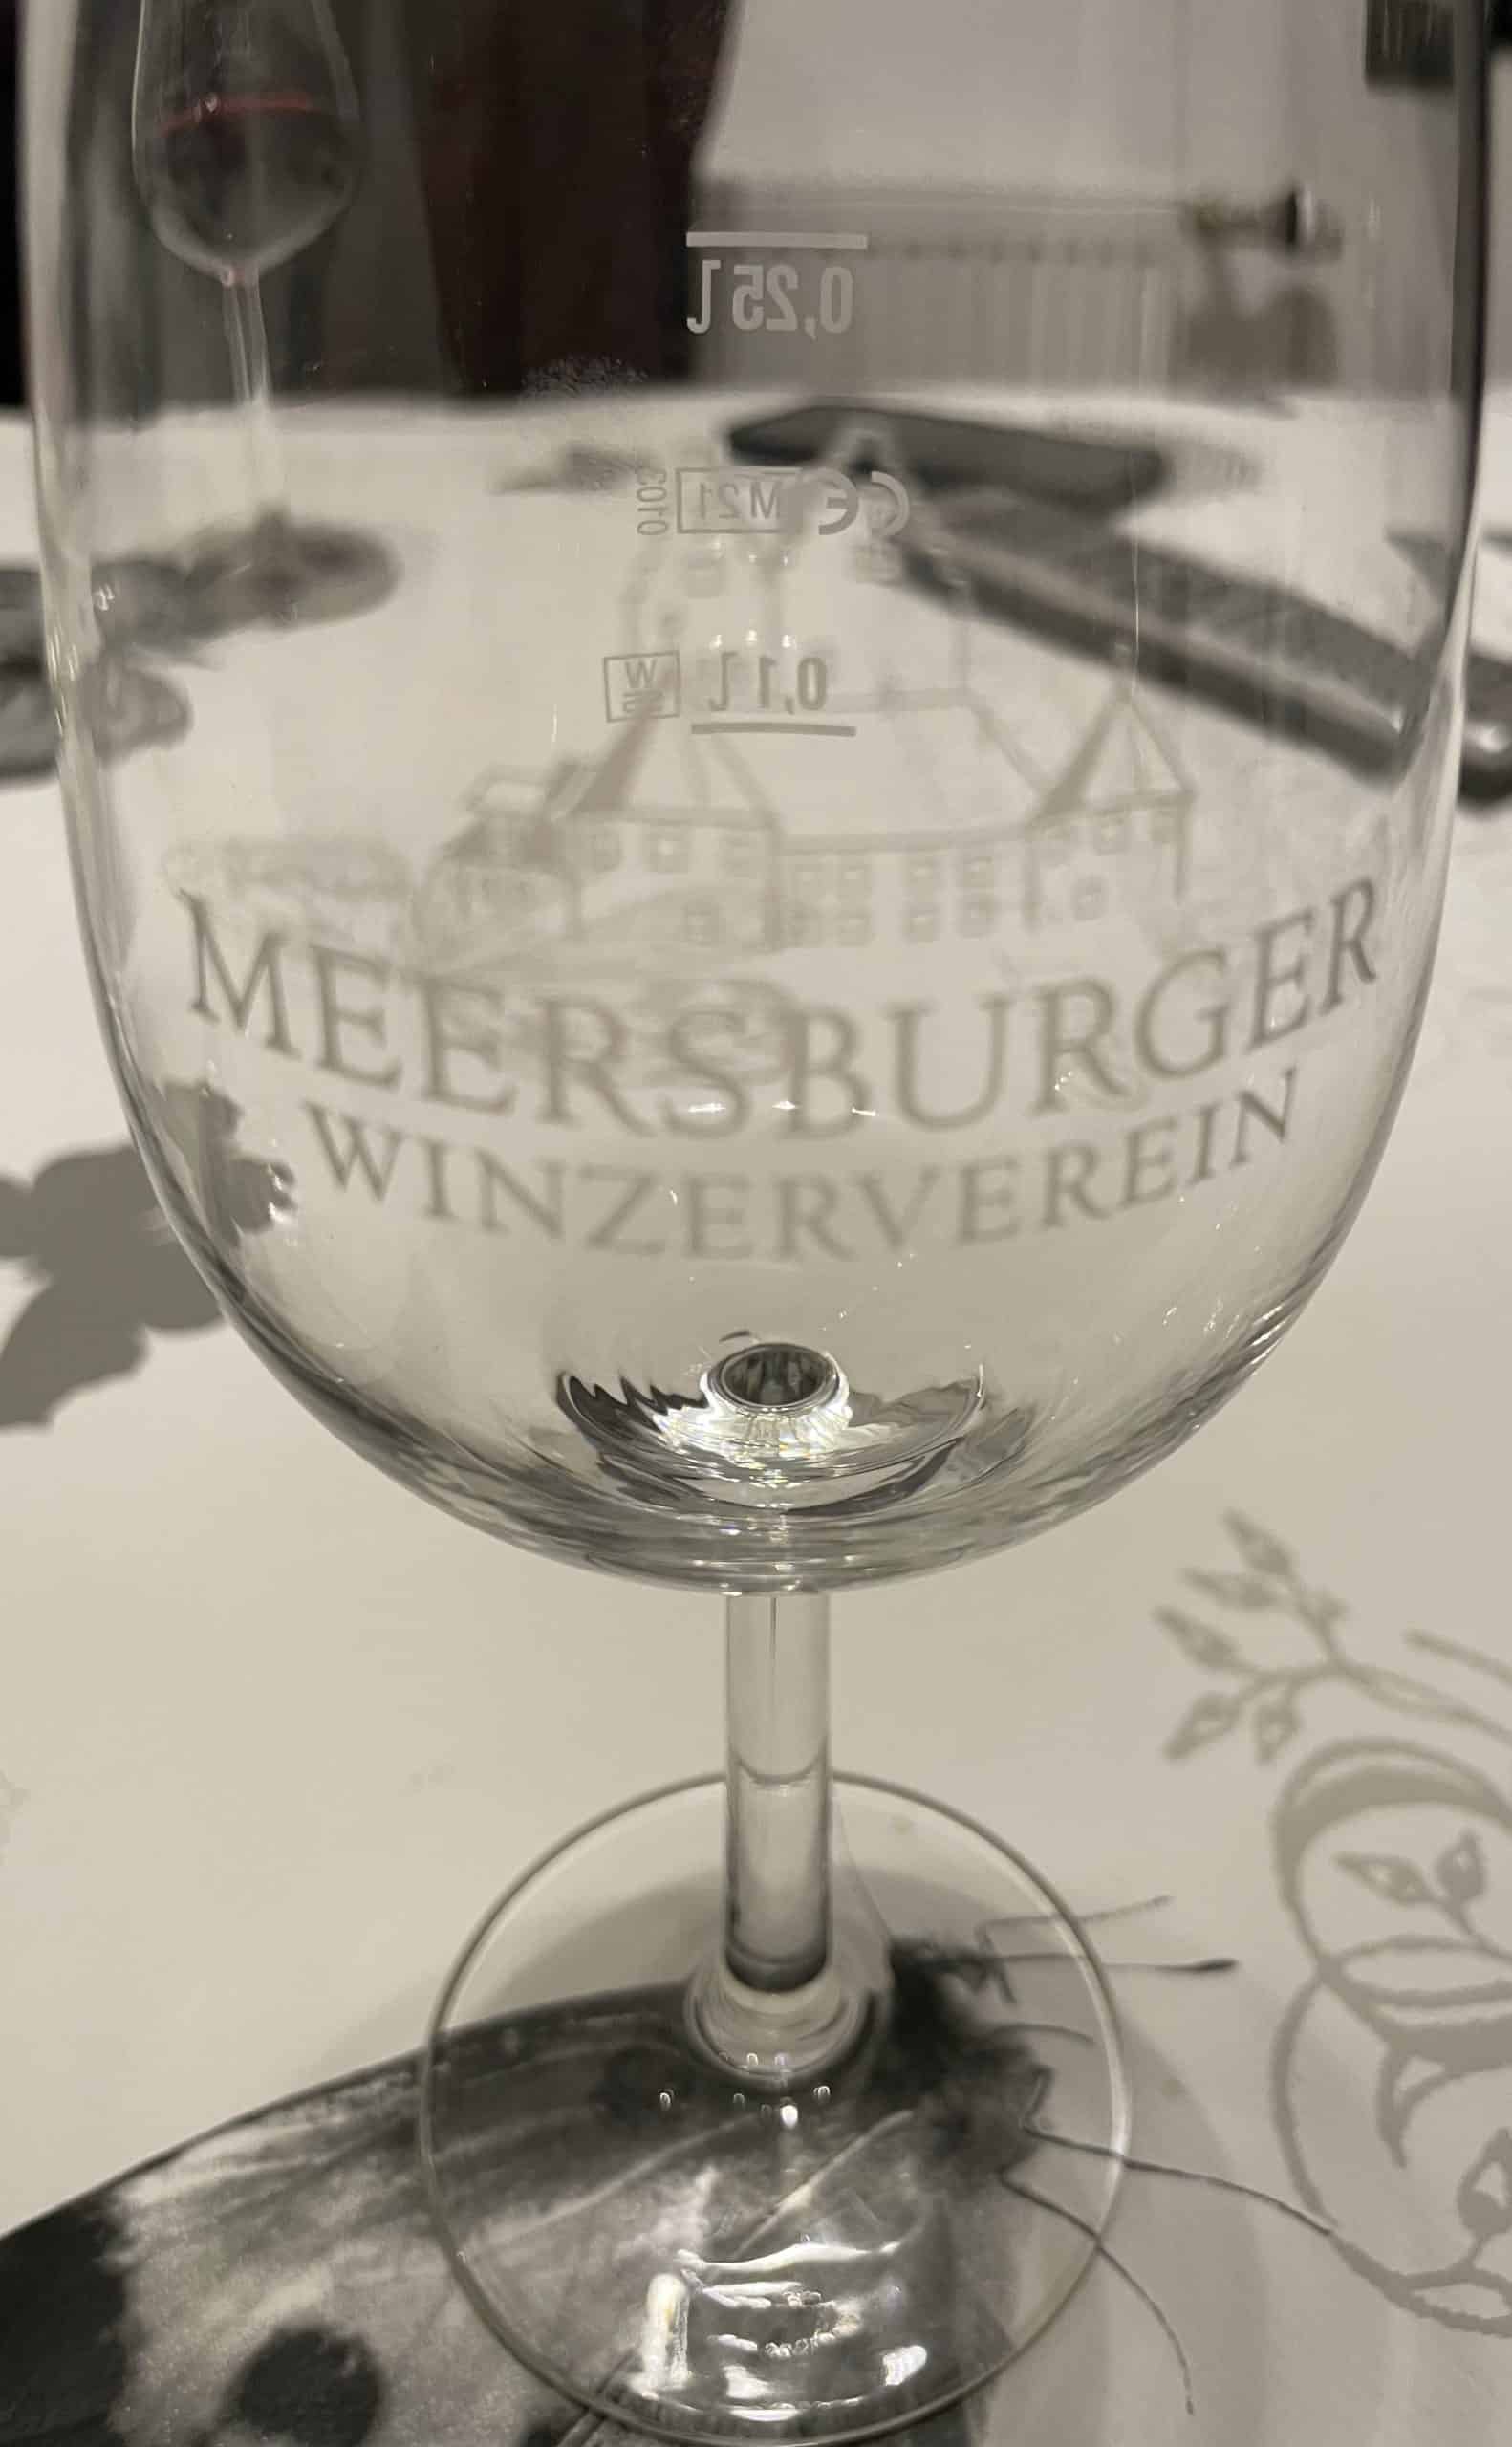 Weinglas vom Meersburger Winzerverein